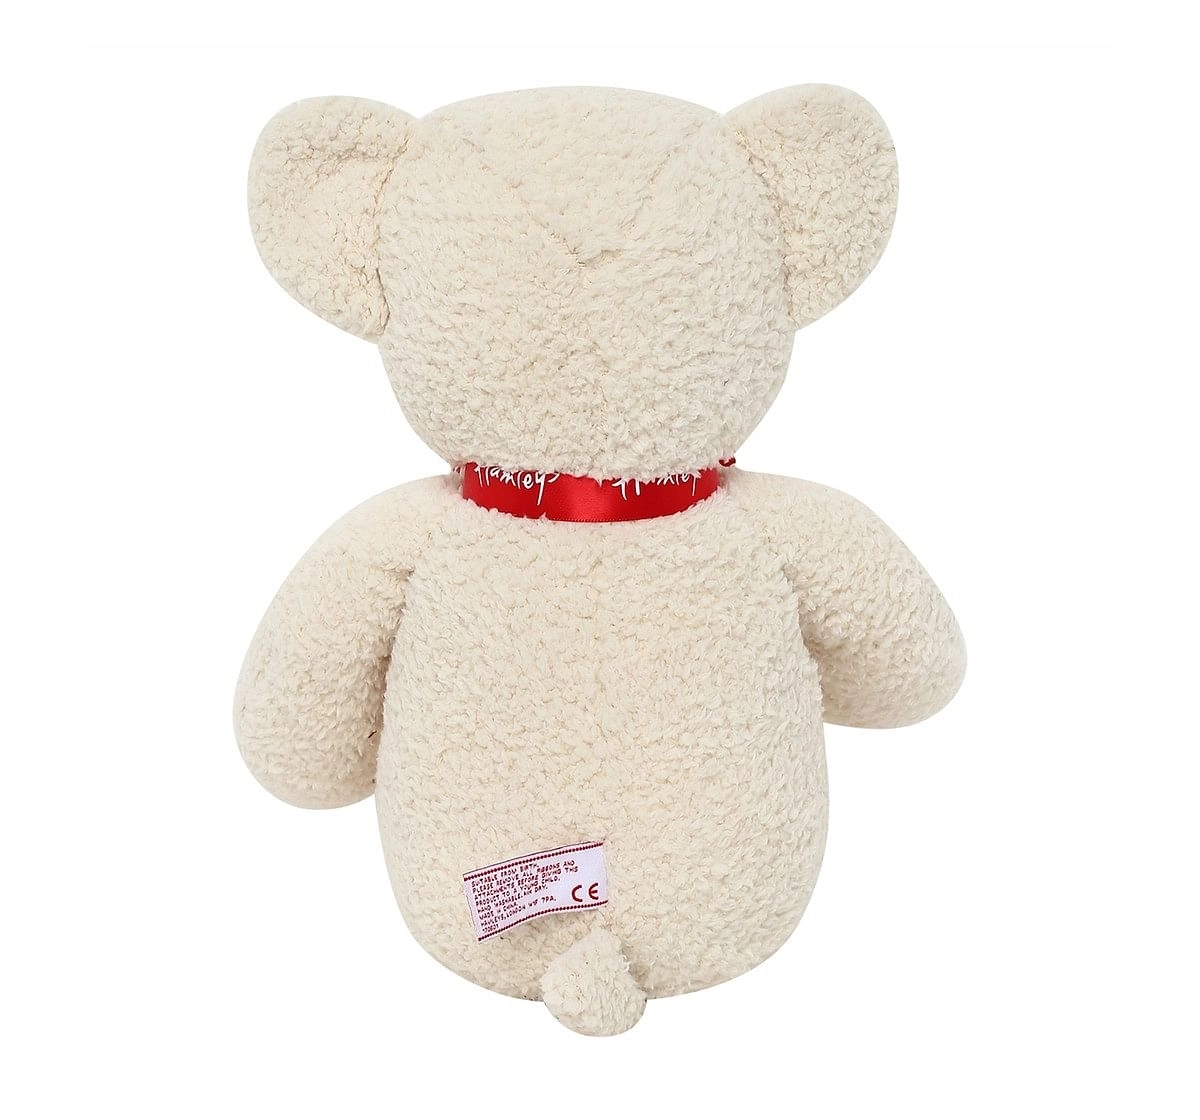  Hamleys Bear Vanilla Teddy Bears for Kids age 3Y+ - 41 Cm (White)